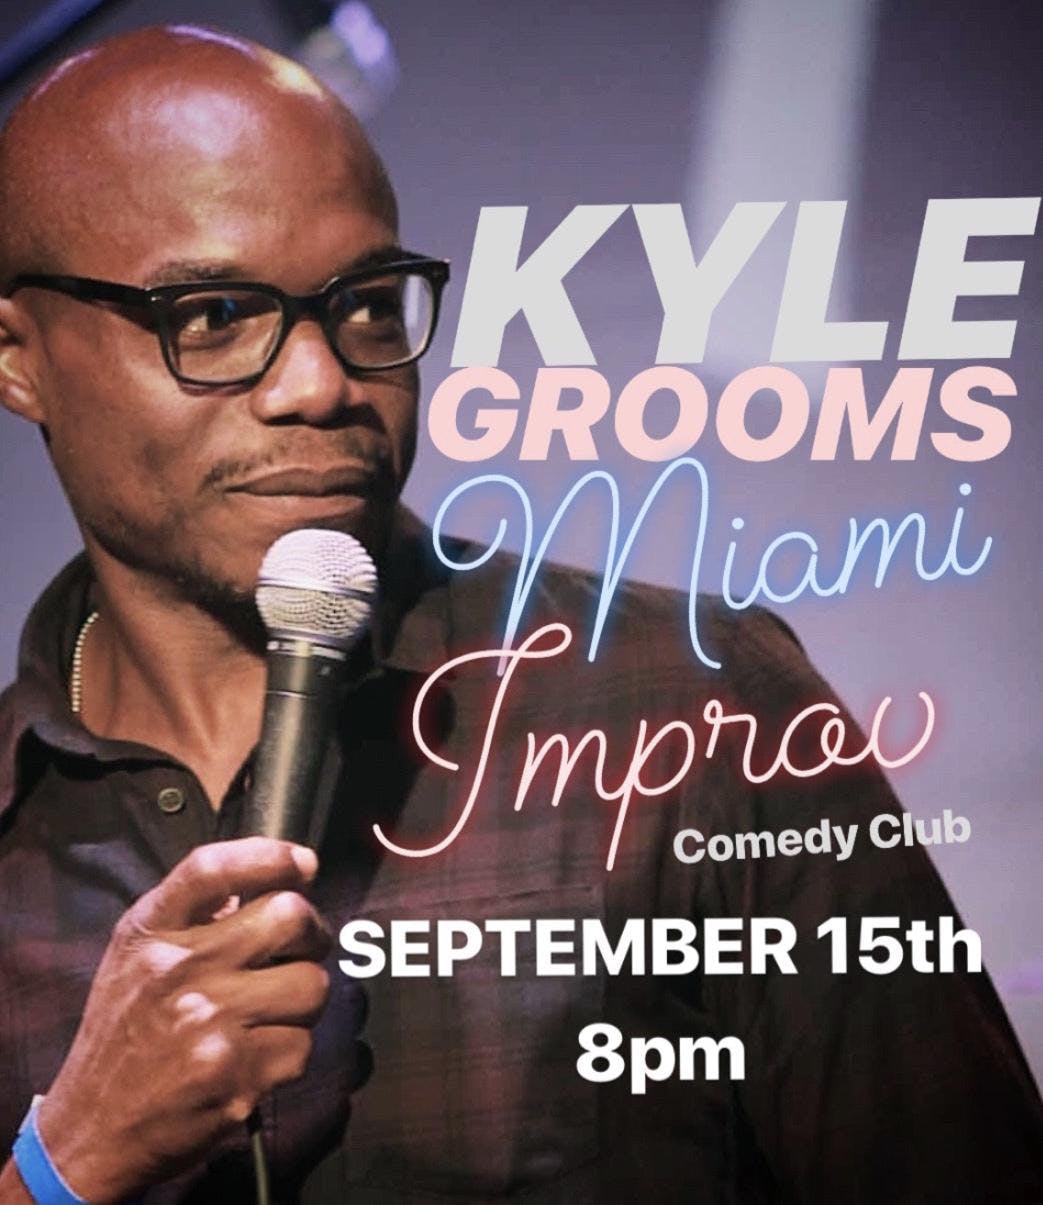 Kyle Grooms @ Miami Improv